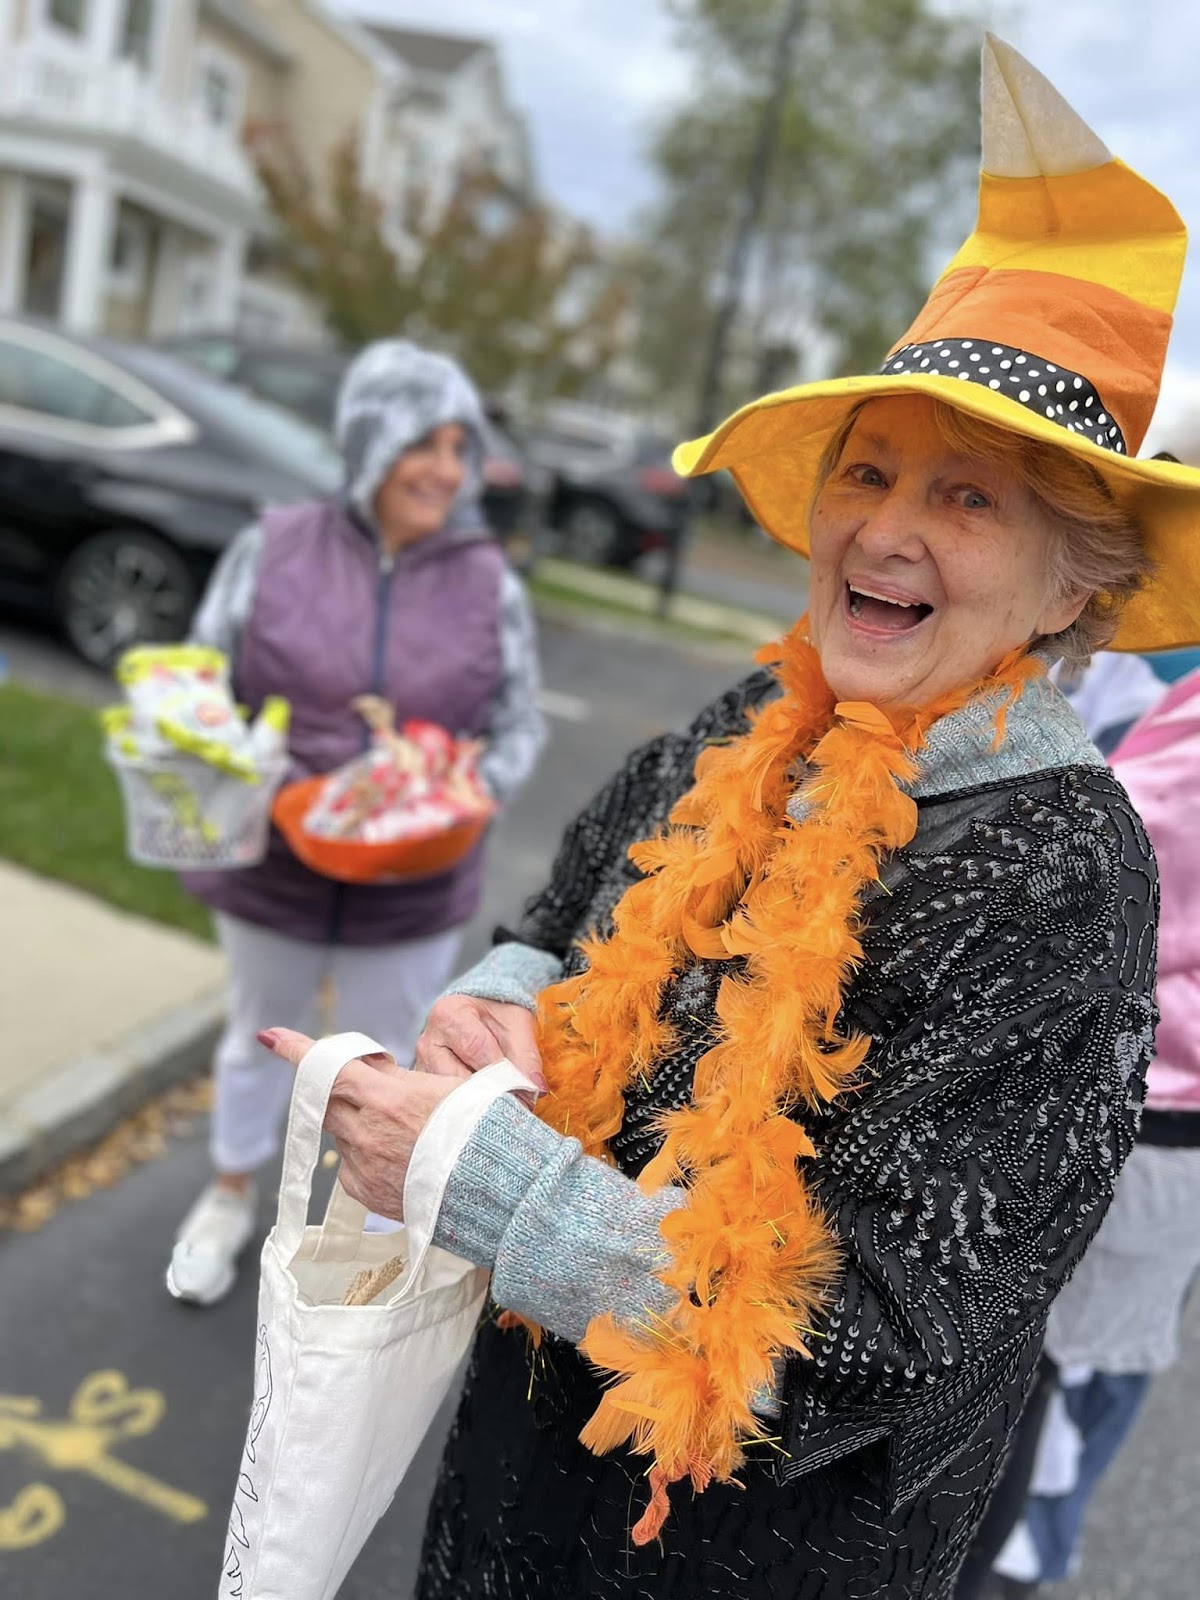 An elderly woman wearing a Halloween costume